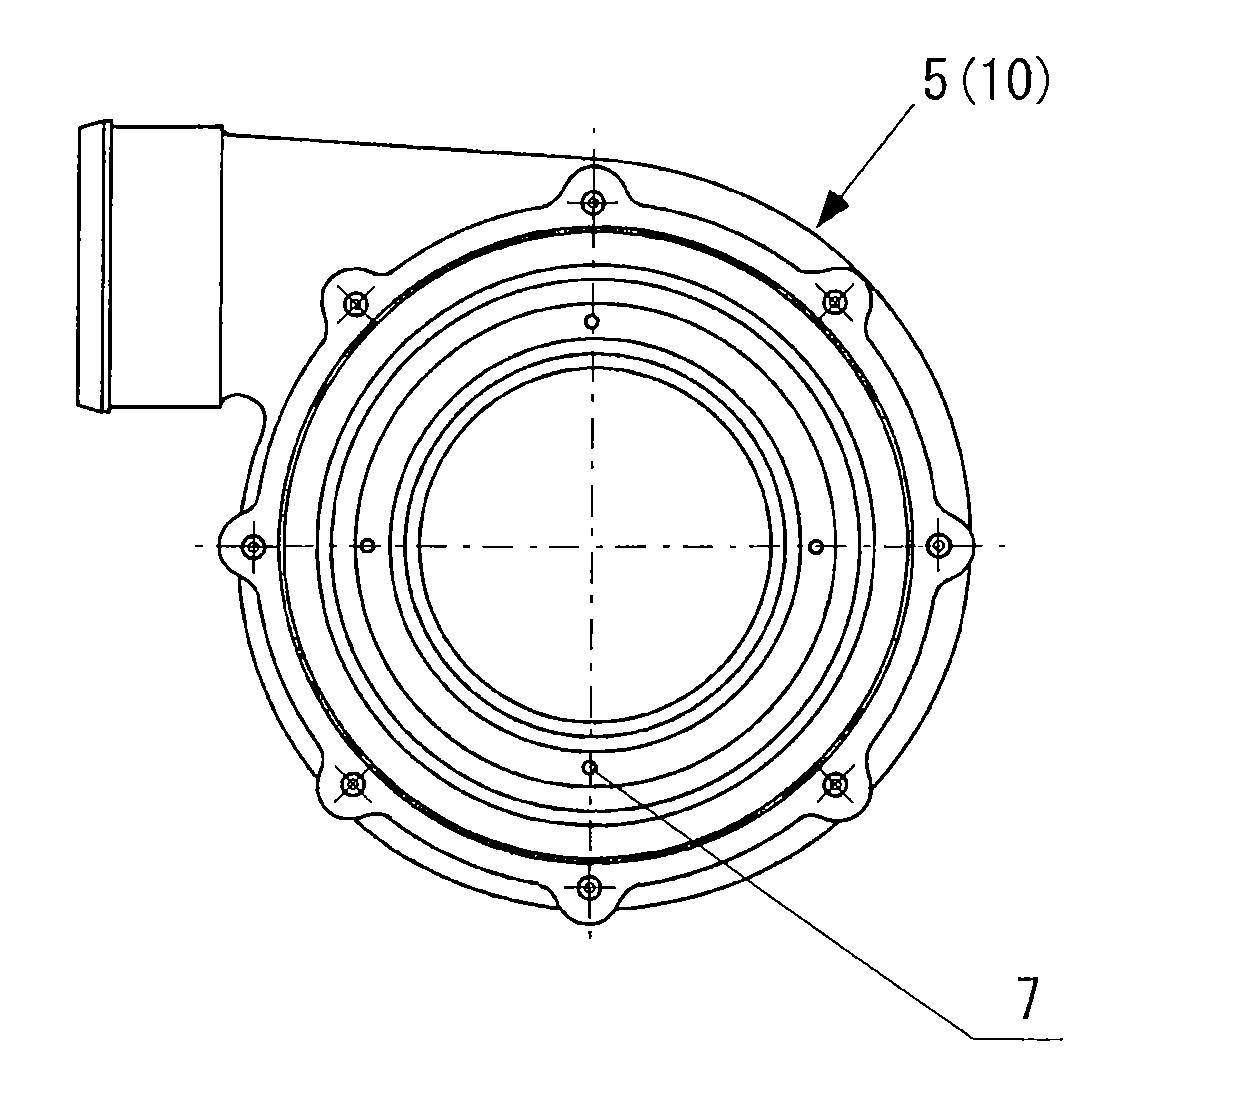 Centrifugal compressor having an asymmetric self-recirculating casing treatment